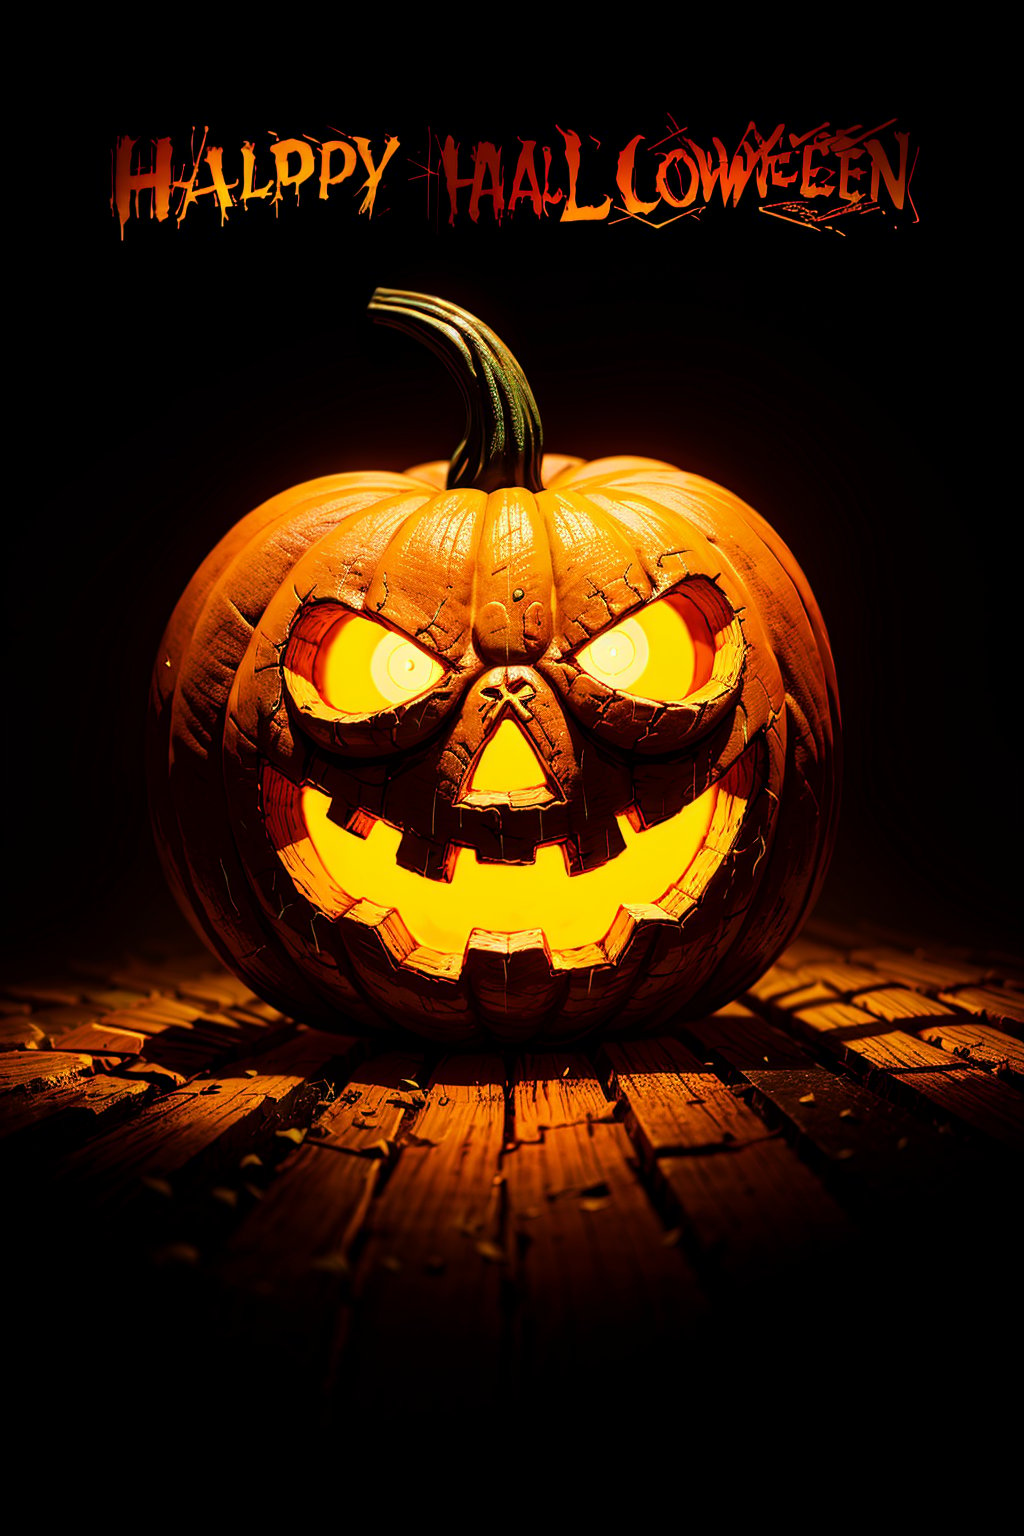 jack-o'-lantern, orange theme, dark, black background, happy halloween, english text, glowing eyes